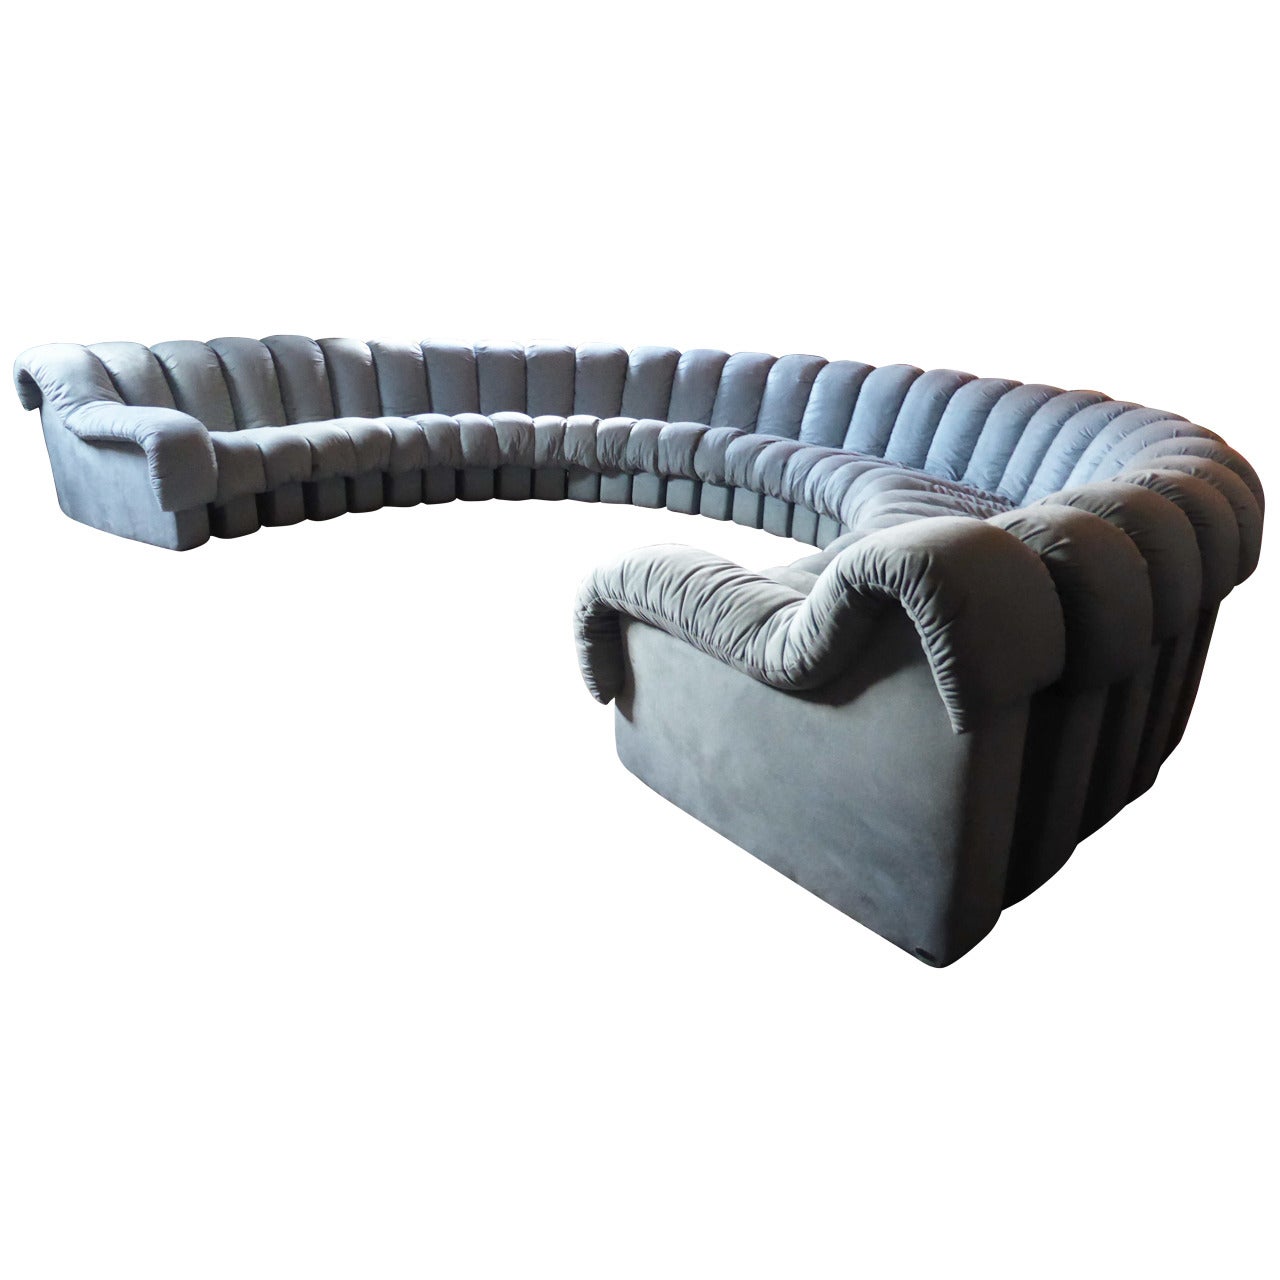 Iconic De Sede DS 600 "Non-Stop" Modular Blue Suede Leather Sofa